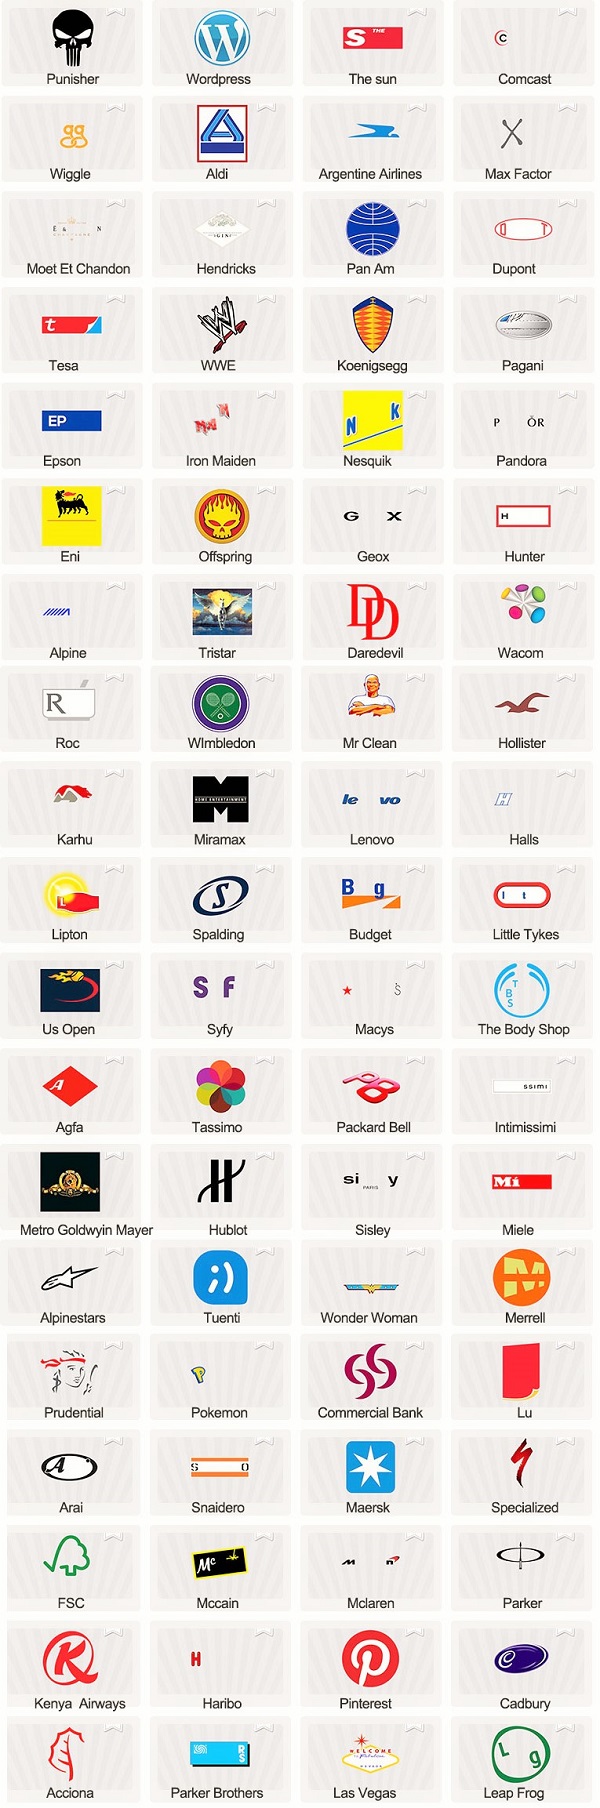 Tech Company Logos Quiz